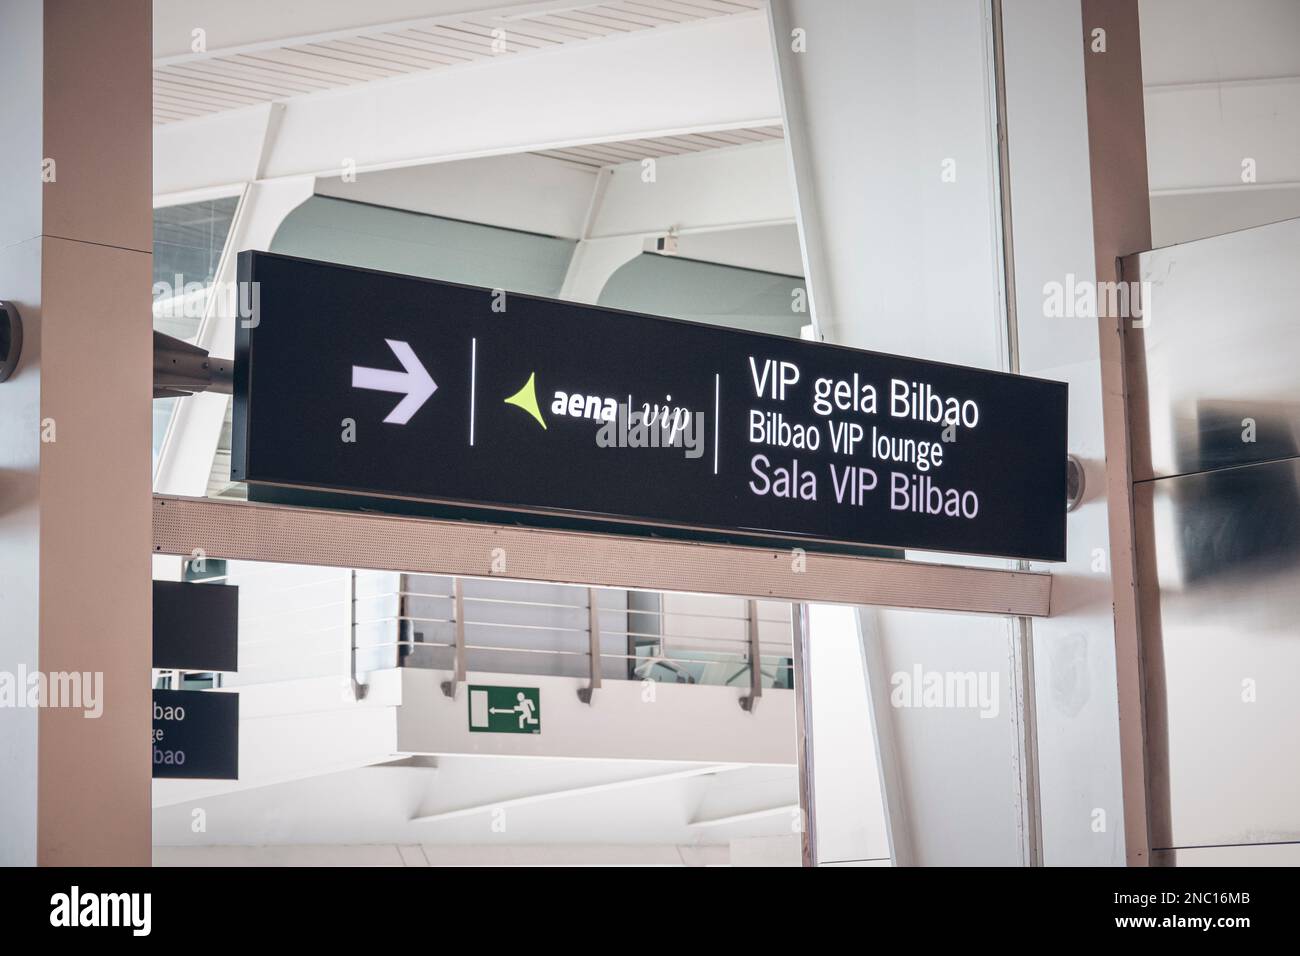 VIP lounge sign at Loiu airport in Bilbao. Stock Photo